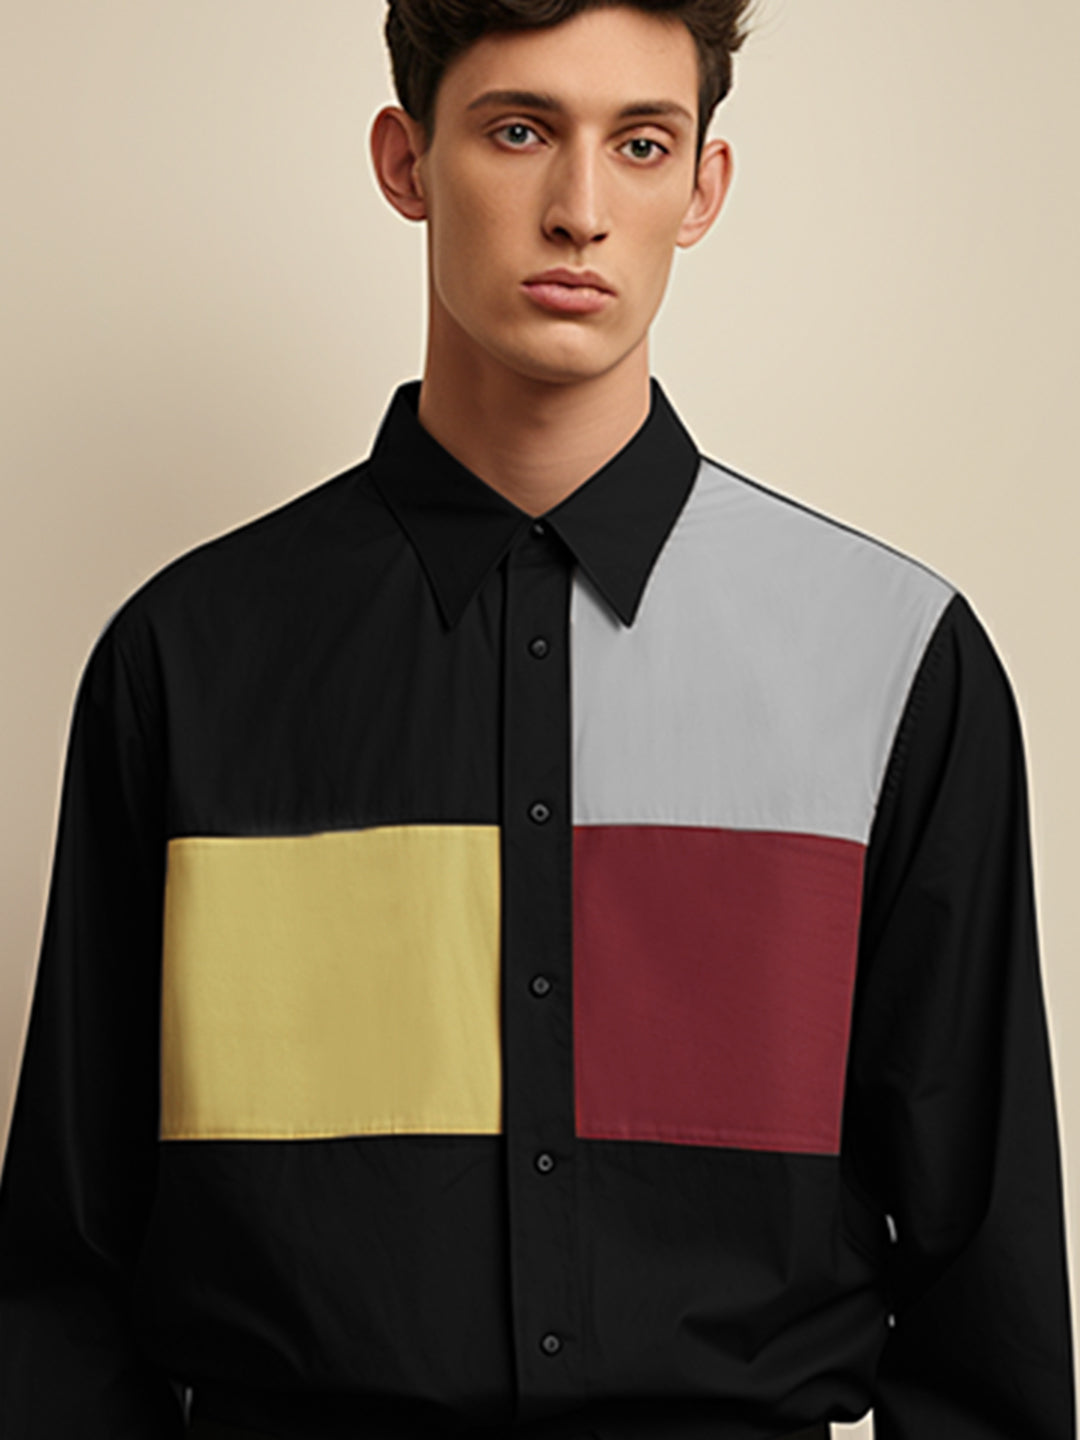 Colourblocked Smart Casual Black Shirt